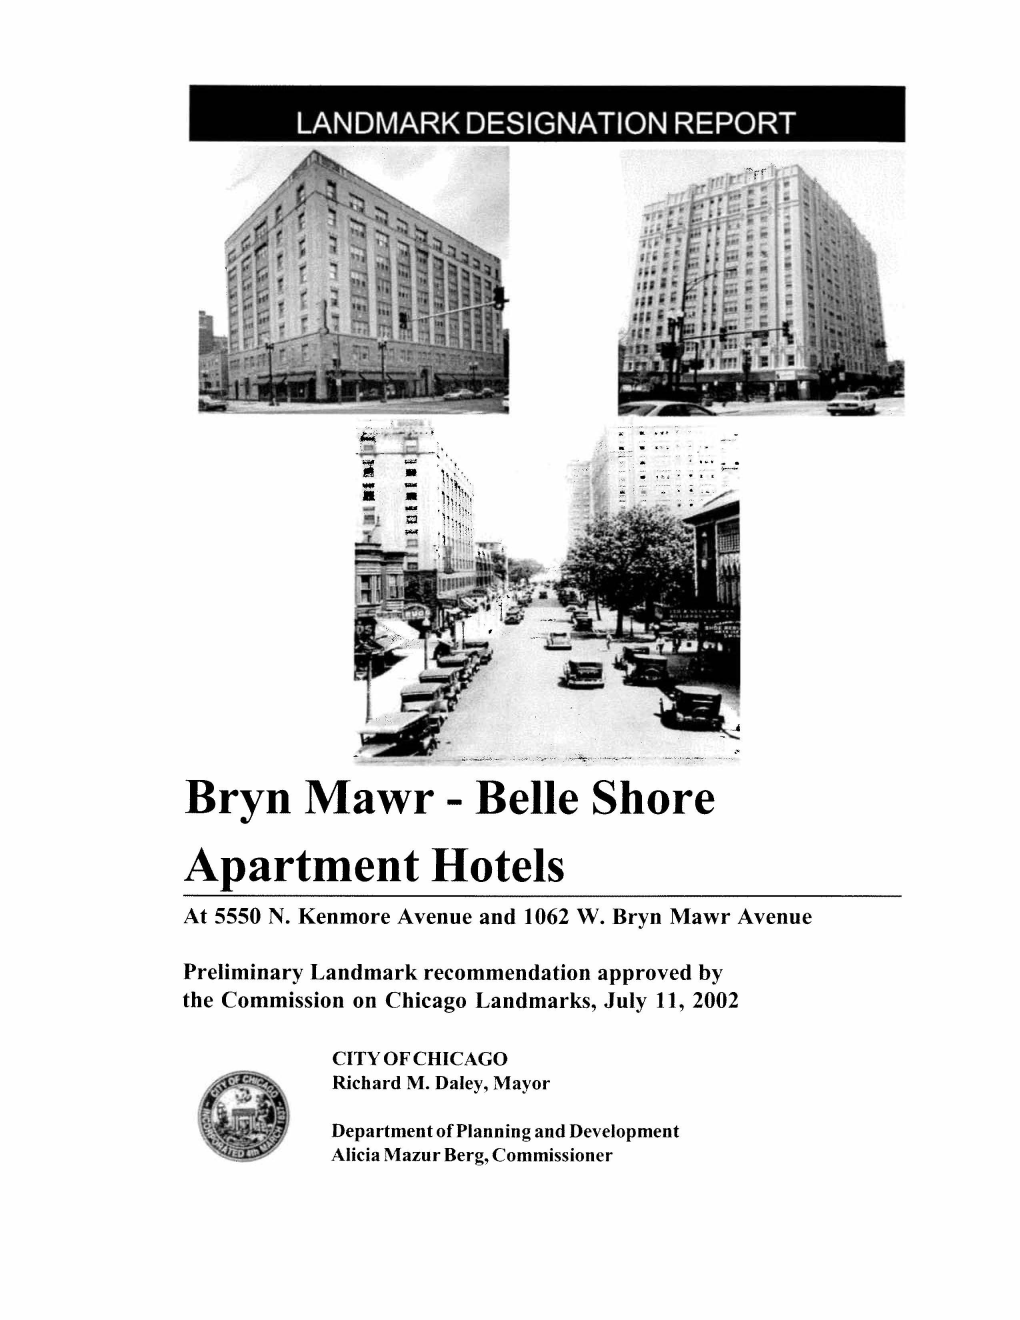 Bryn Mawr-Belle Shore Apartment Hotels